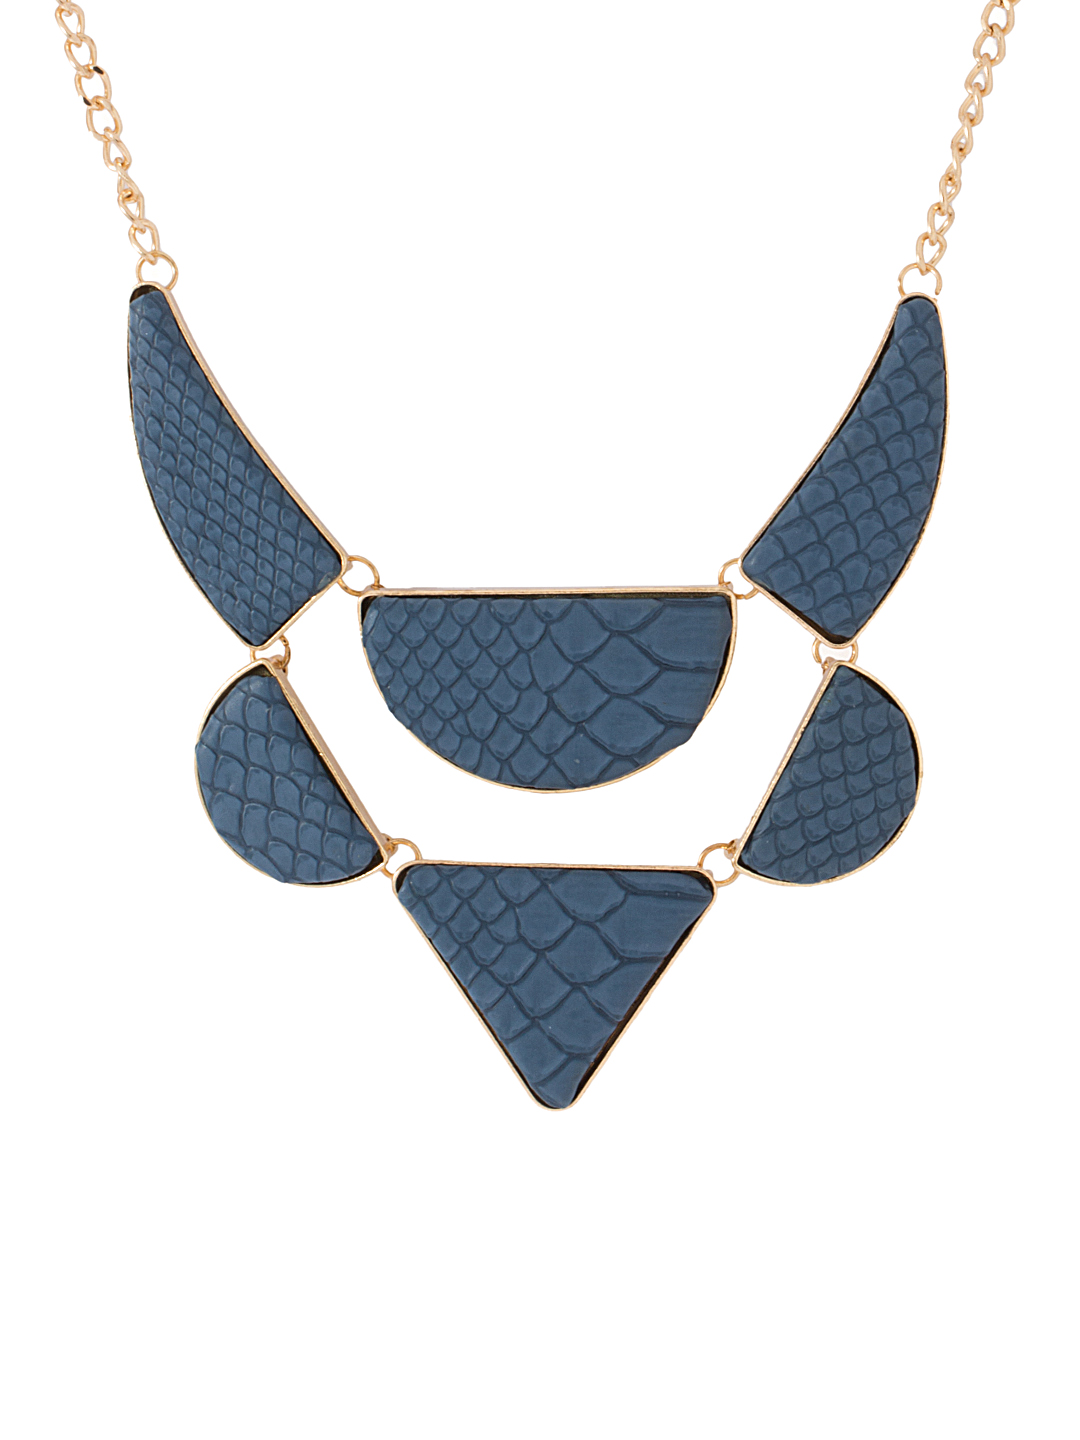 Voylla Gold-Toned & Blue Statement Necklace